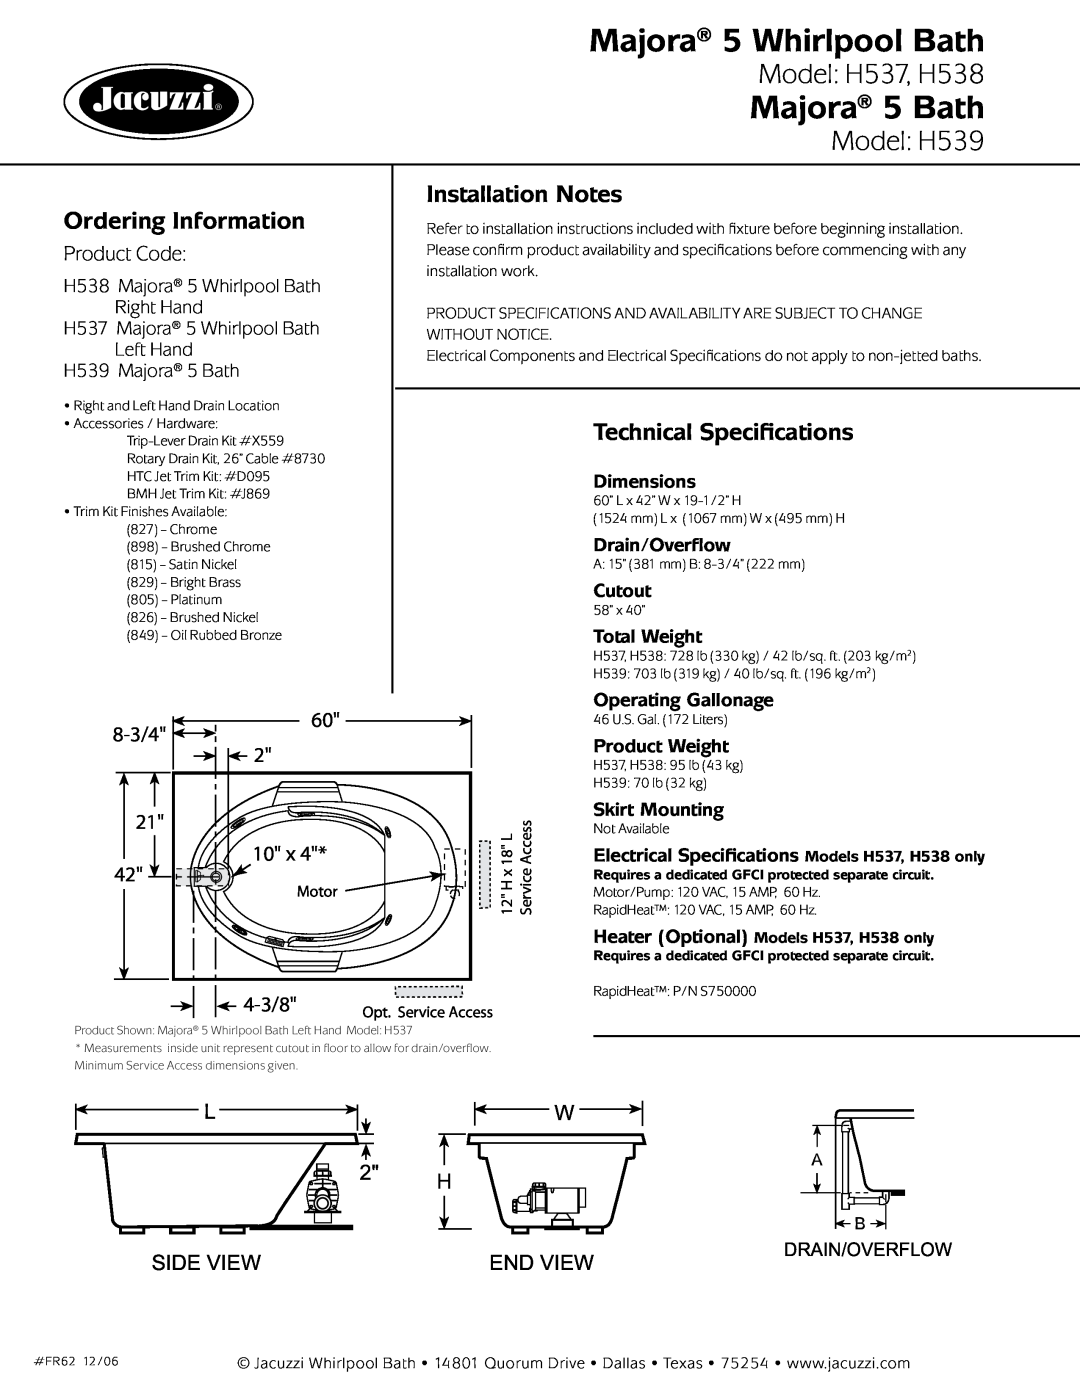 Jacuzzi FR62 Majora 5 Whirlpool Bath, Majora 5 Bath, Model H537, H538, Model H539, Ordering Information, Product Code 